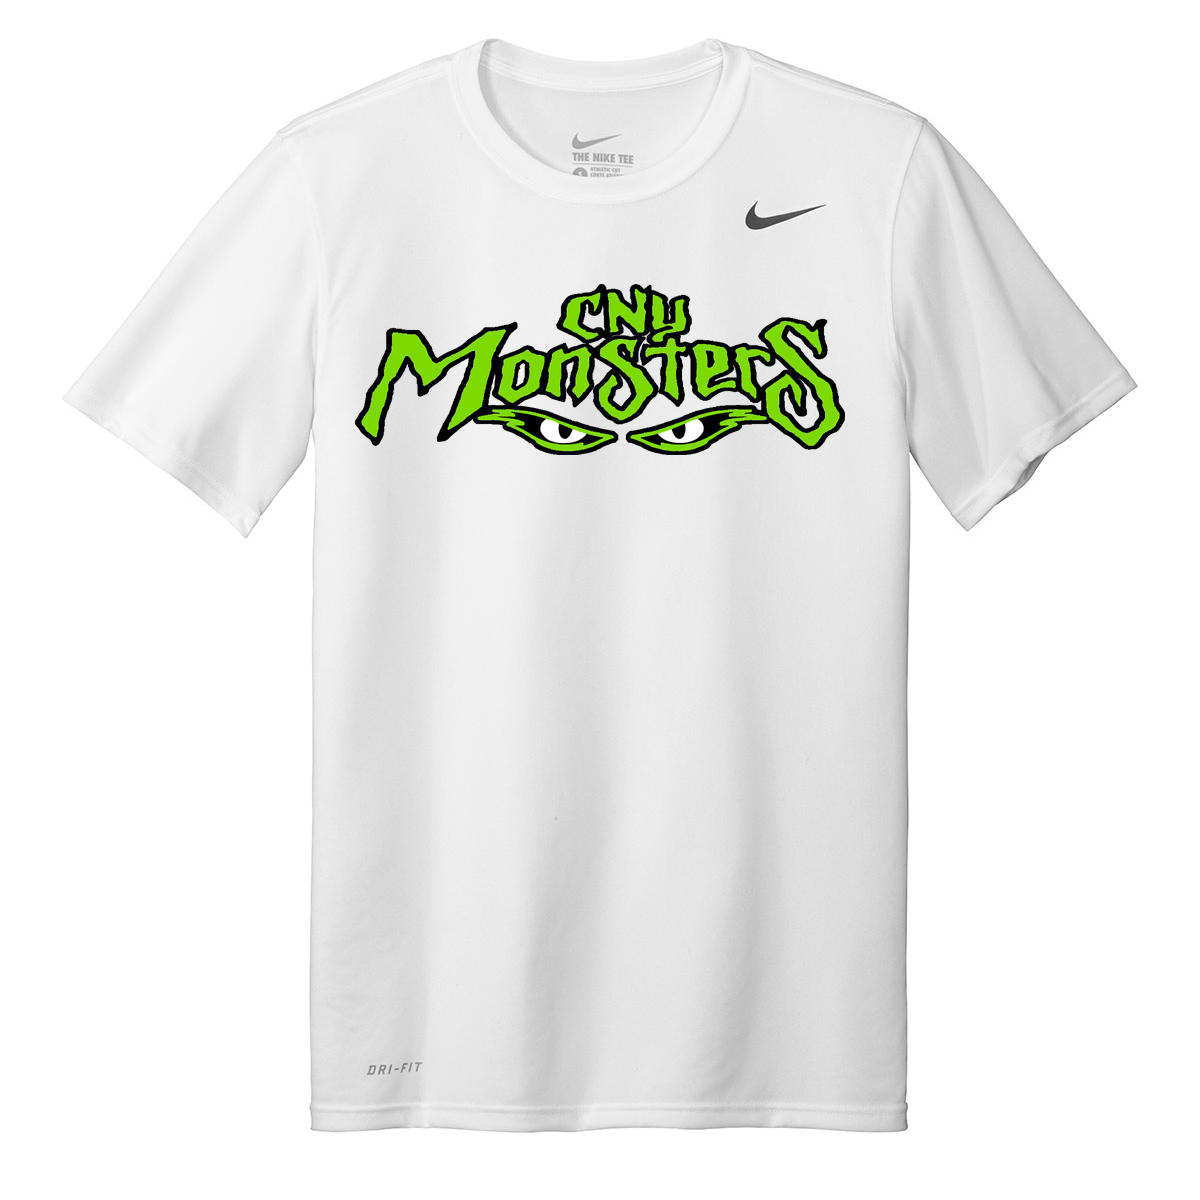 CNY Monsters Softball Nike rLegend Tee